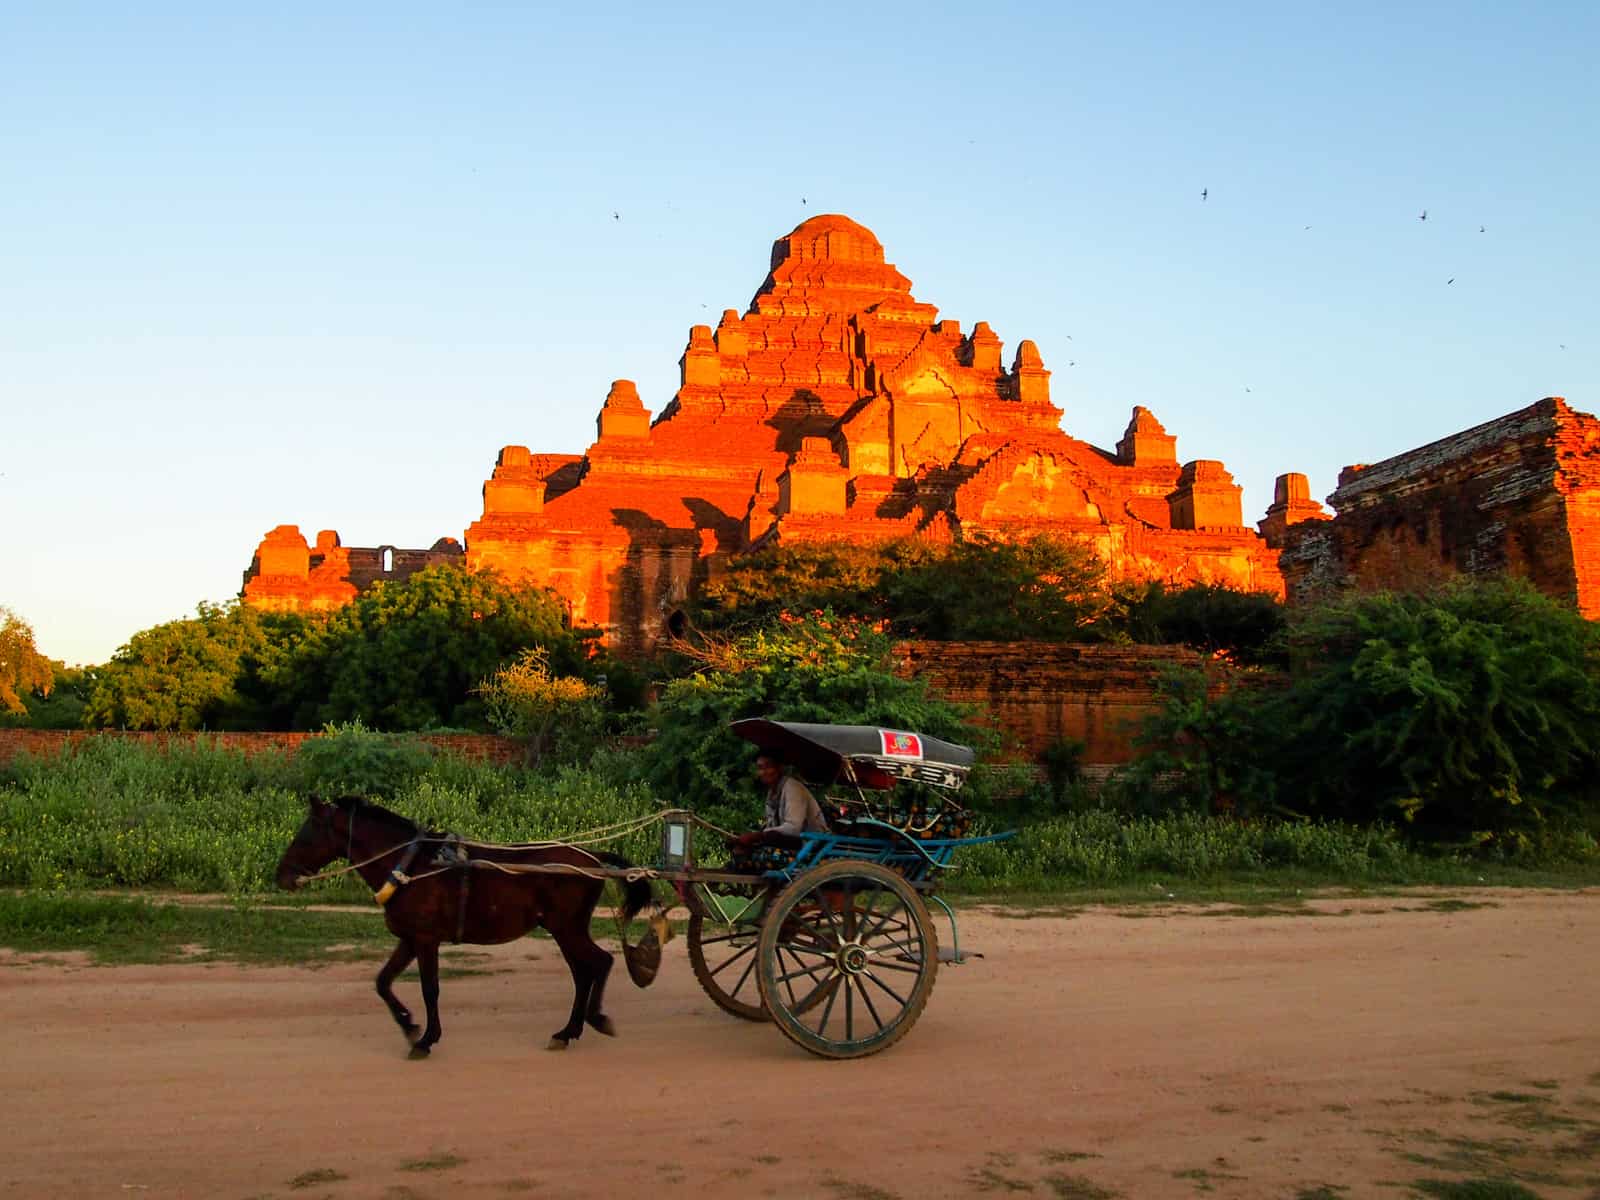 Horse and carriage at Bagan